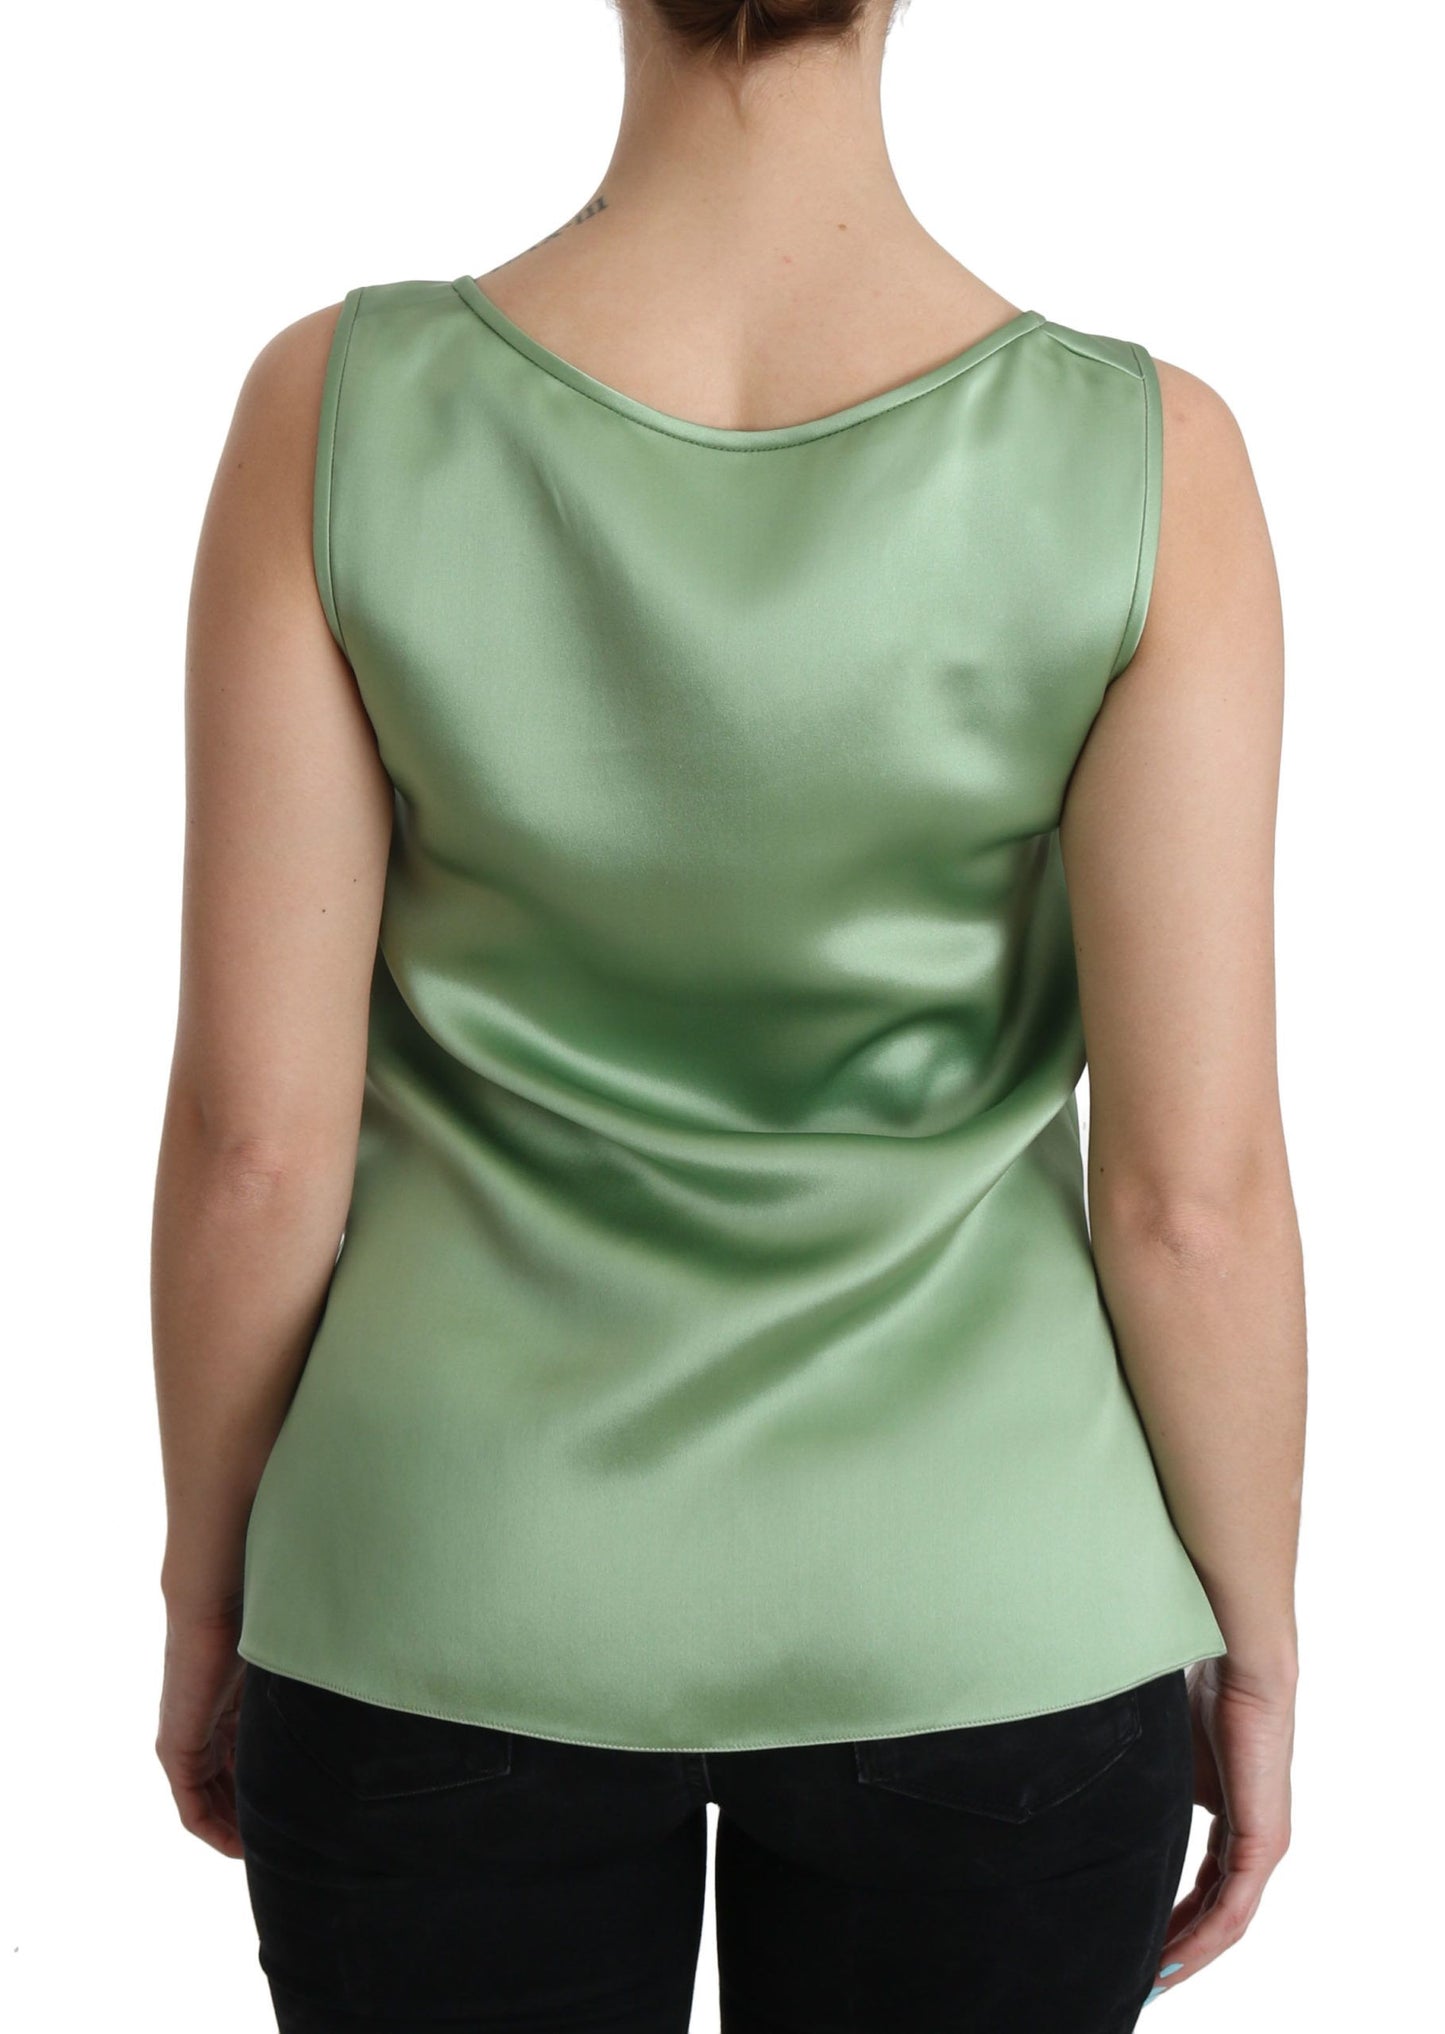 Green Sleeveless 100% Silk Top Tank Blouse